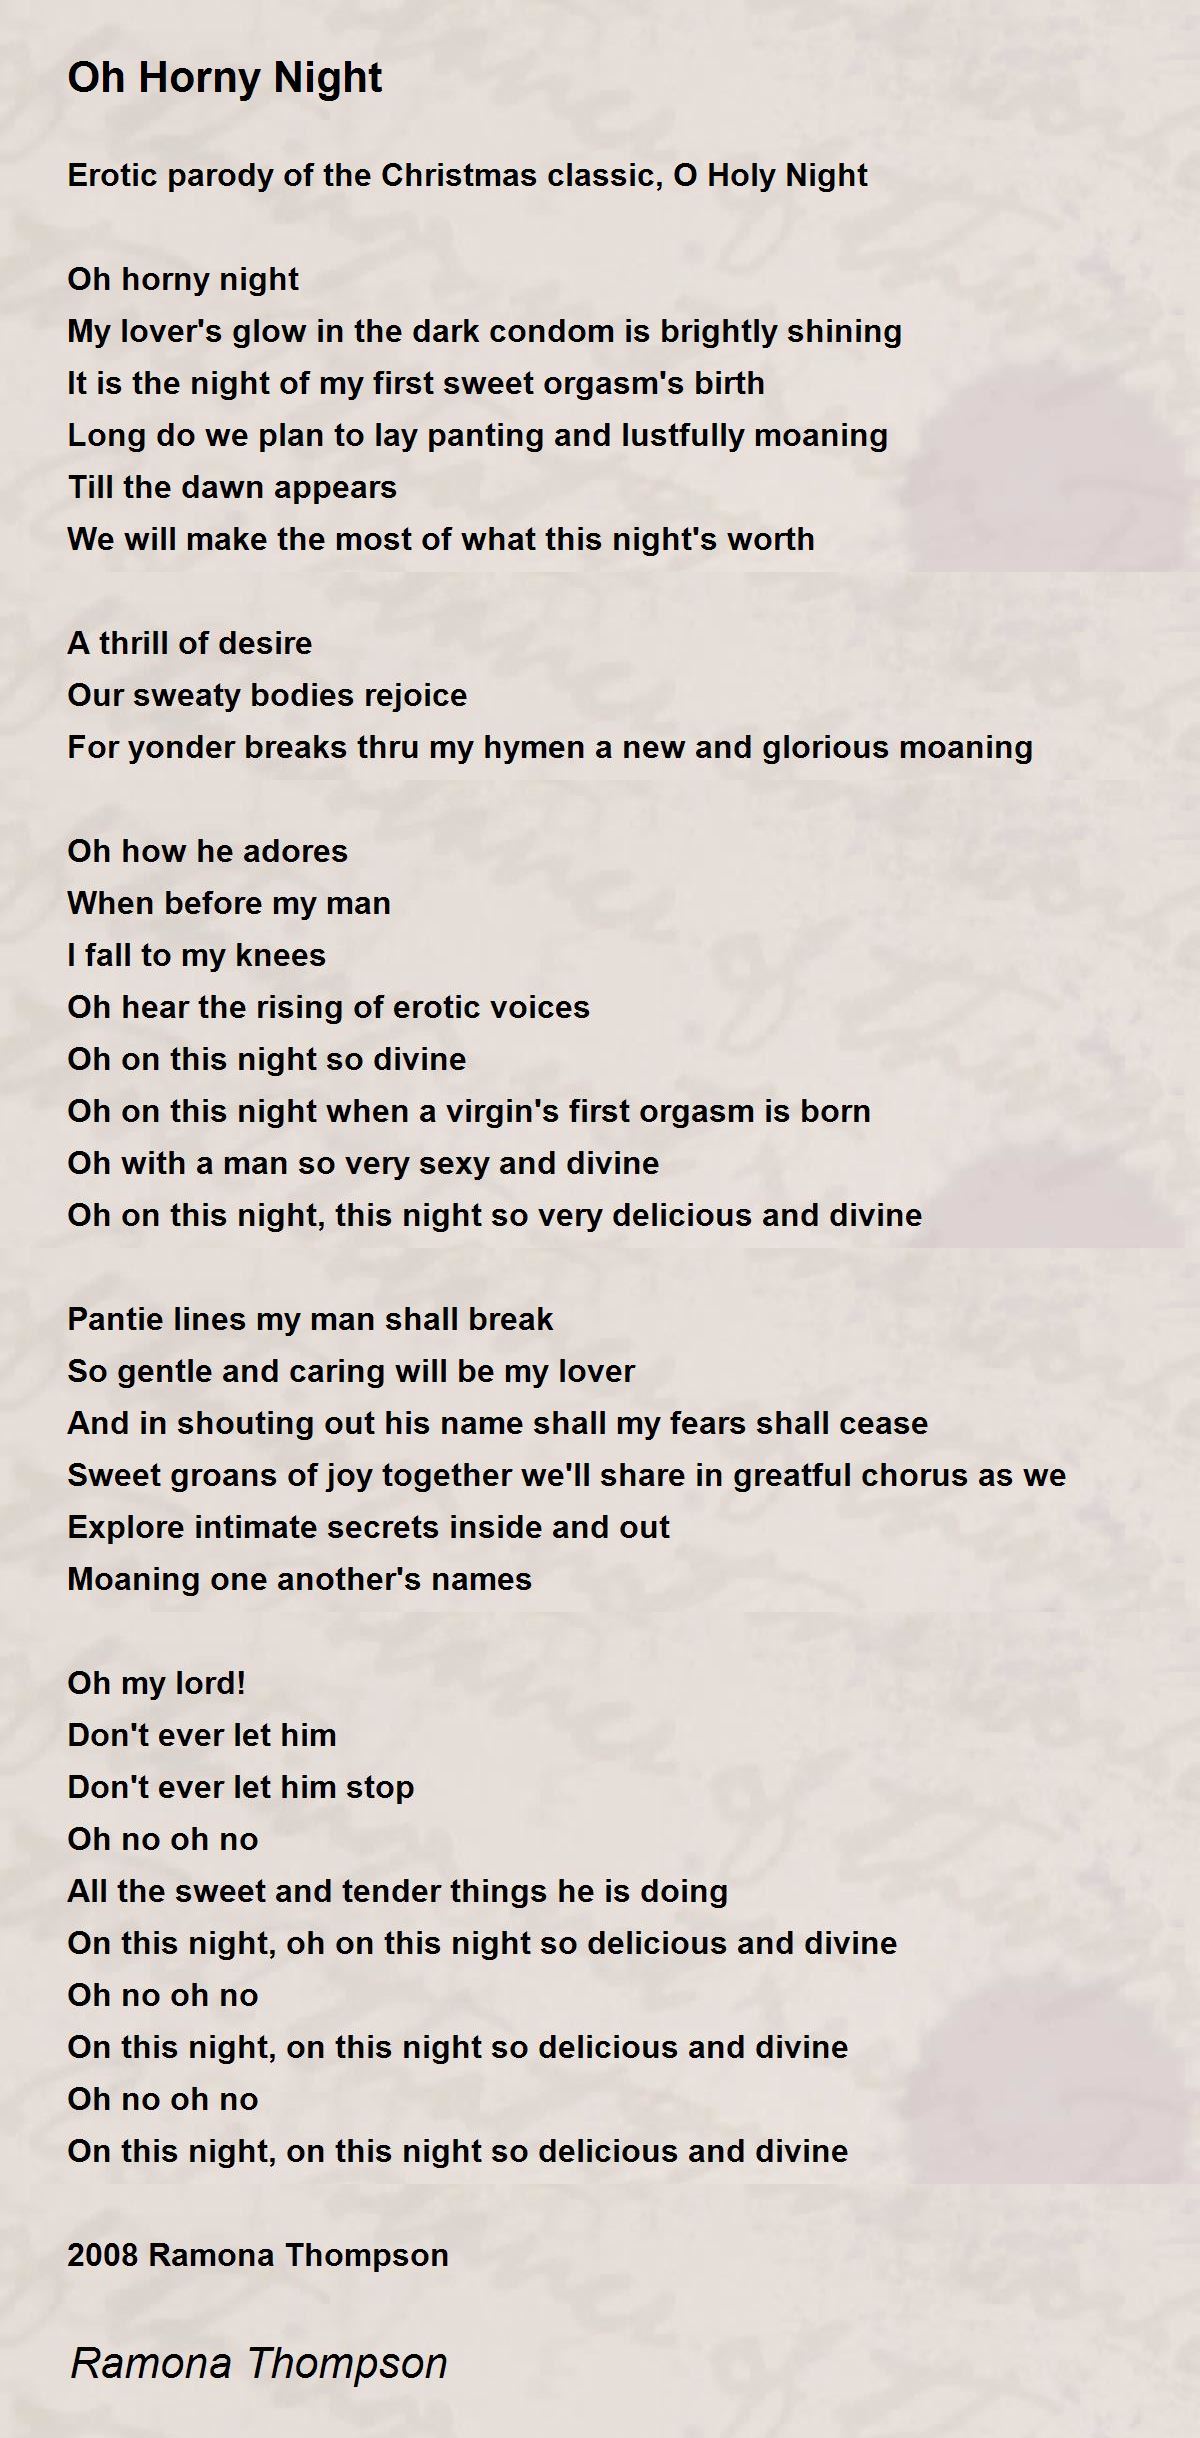 Oh Horny Night Poem by Ramona Thompson pic